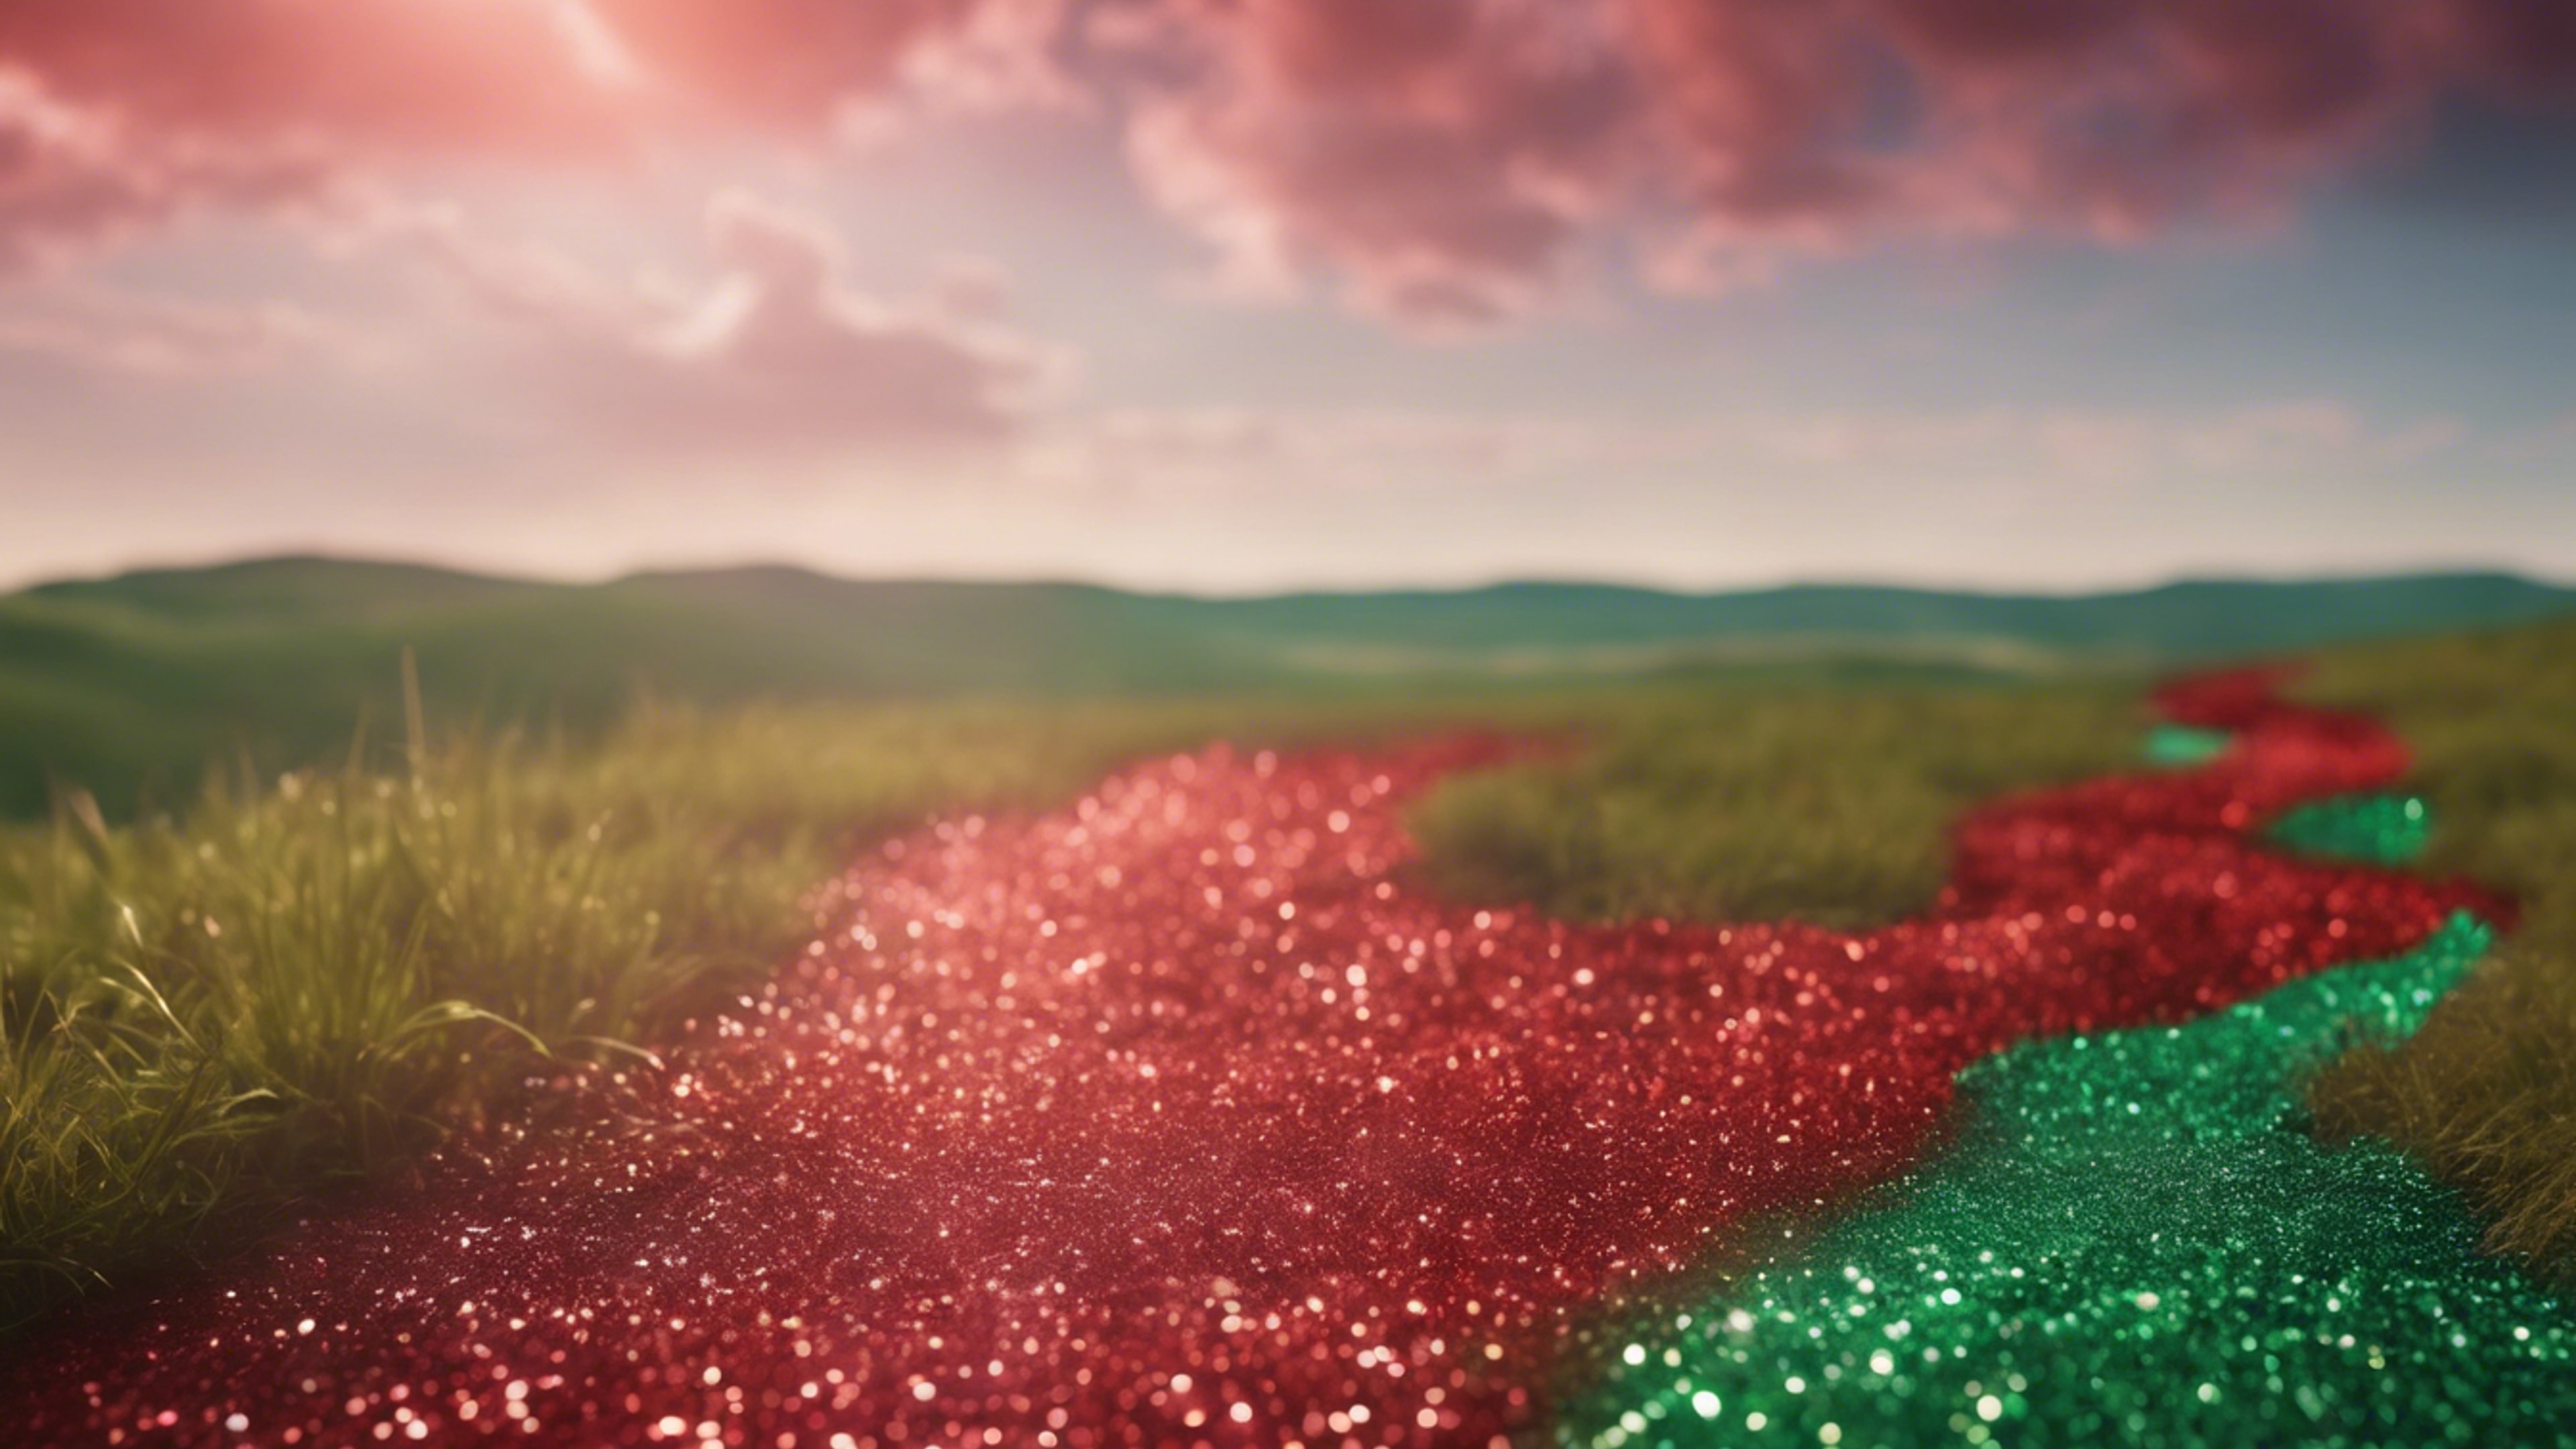 Path of shiny green and red glitter towards the horizon Tapeta[4b670e6c3f1f43adb6d1]